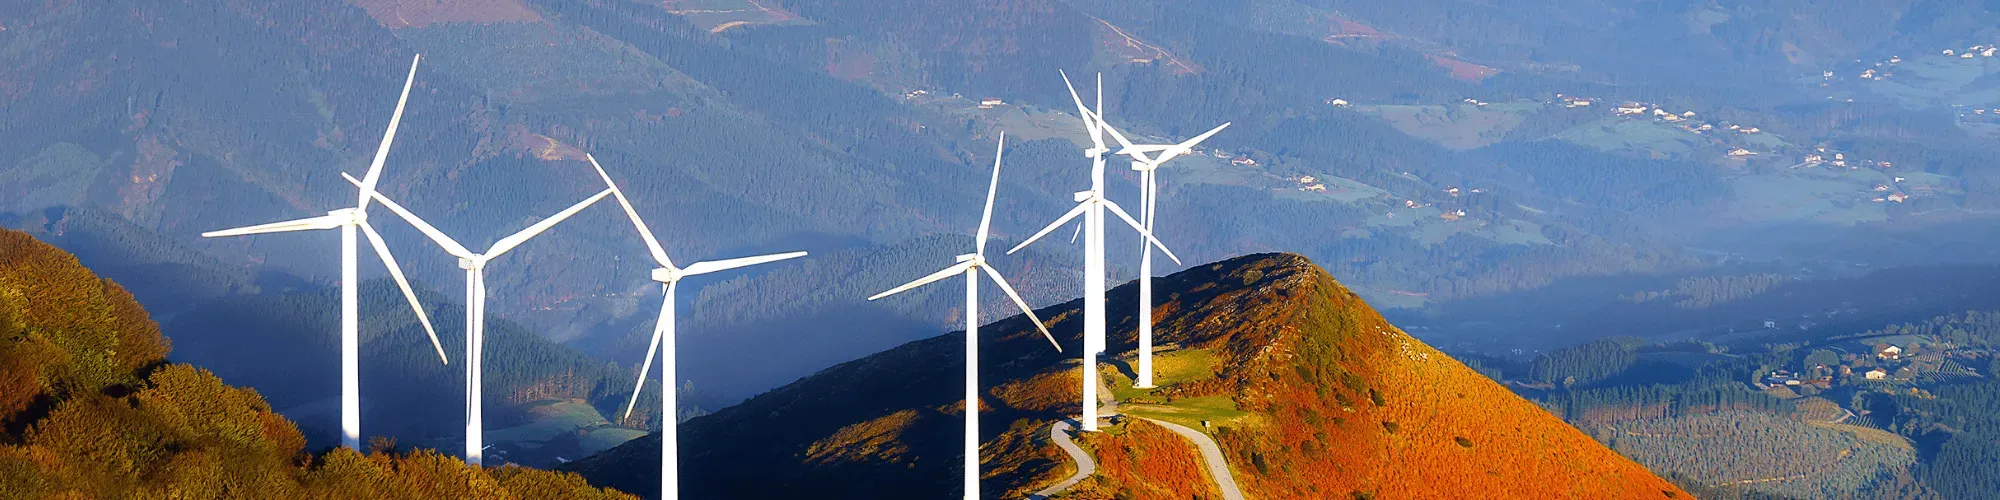 Wind turbines in the UK producing renewable energy